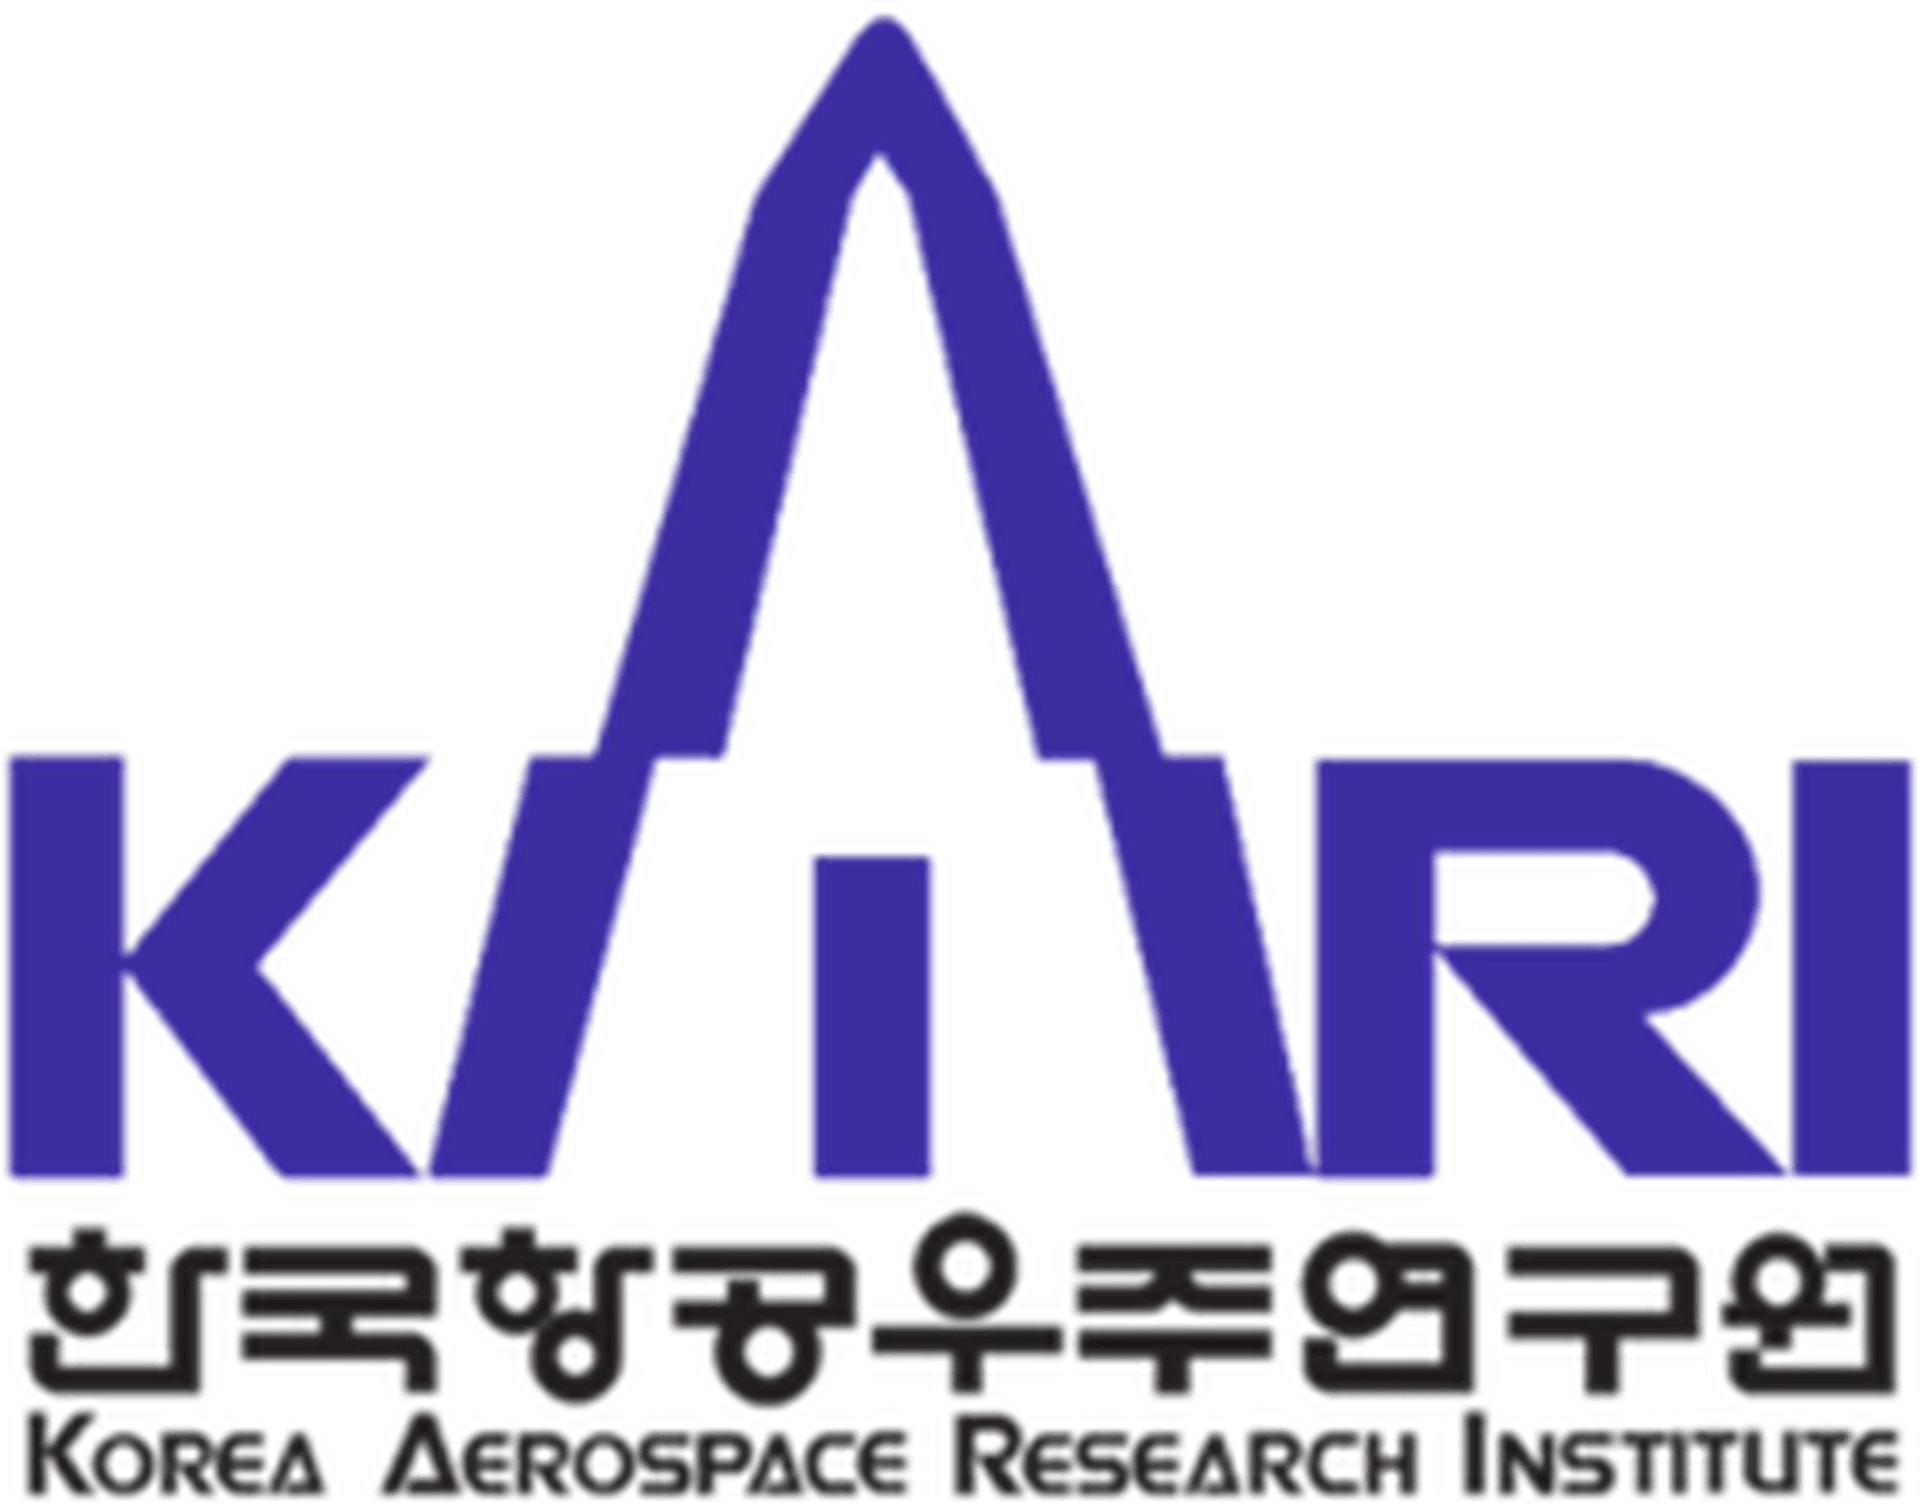 Korea Aerospace Research Institute's logo